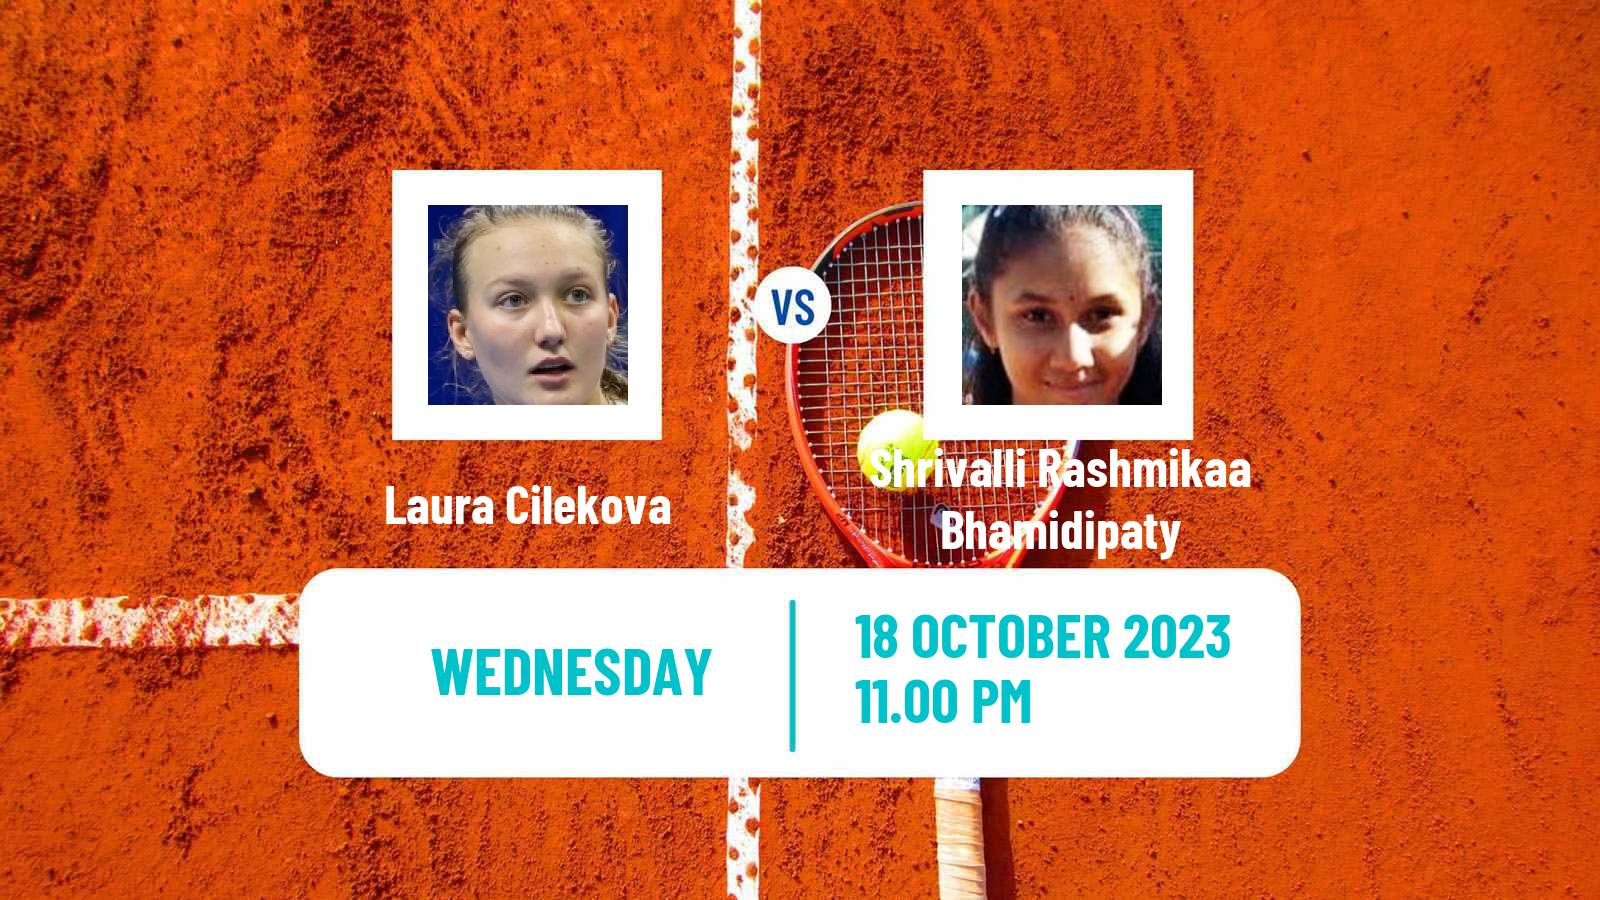 Tennis ITF W15 Hua Hin 2 Women Laura Cilekova - Shrivalli Rashmikaa Bhamidipaty